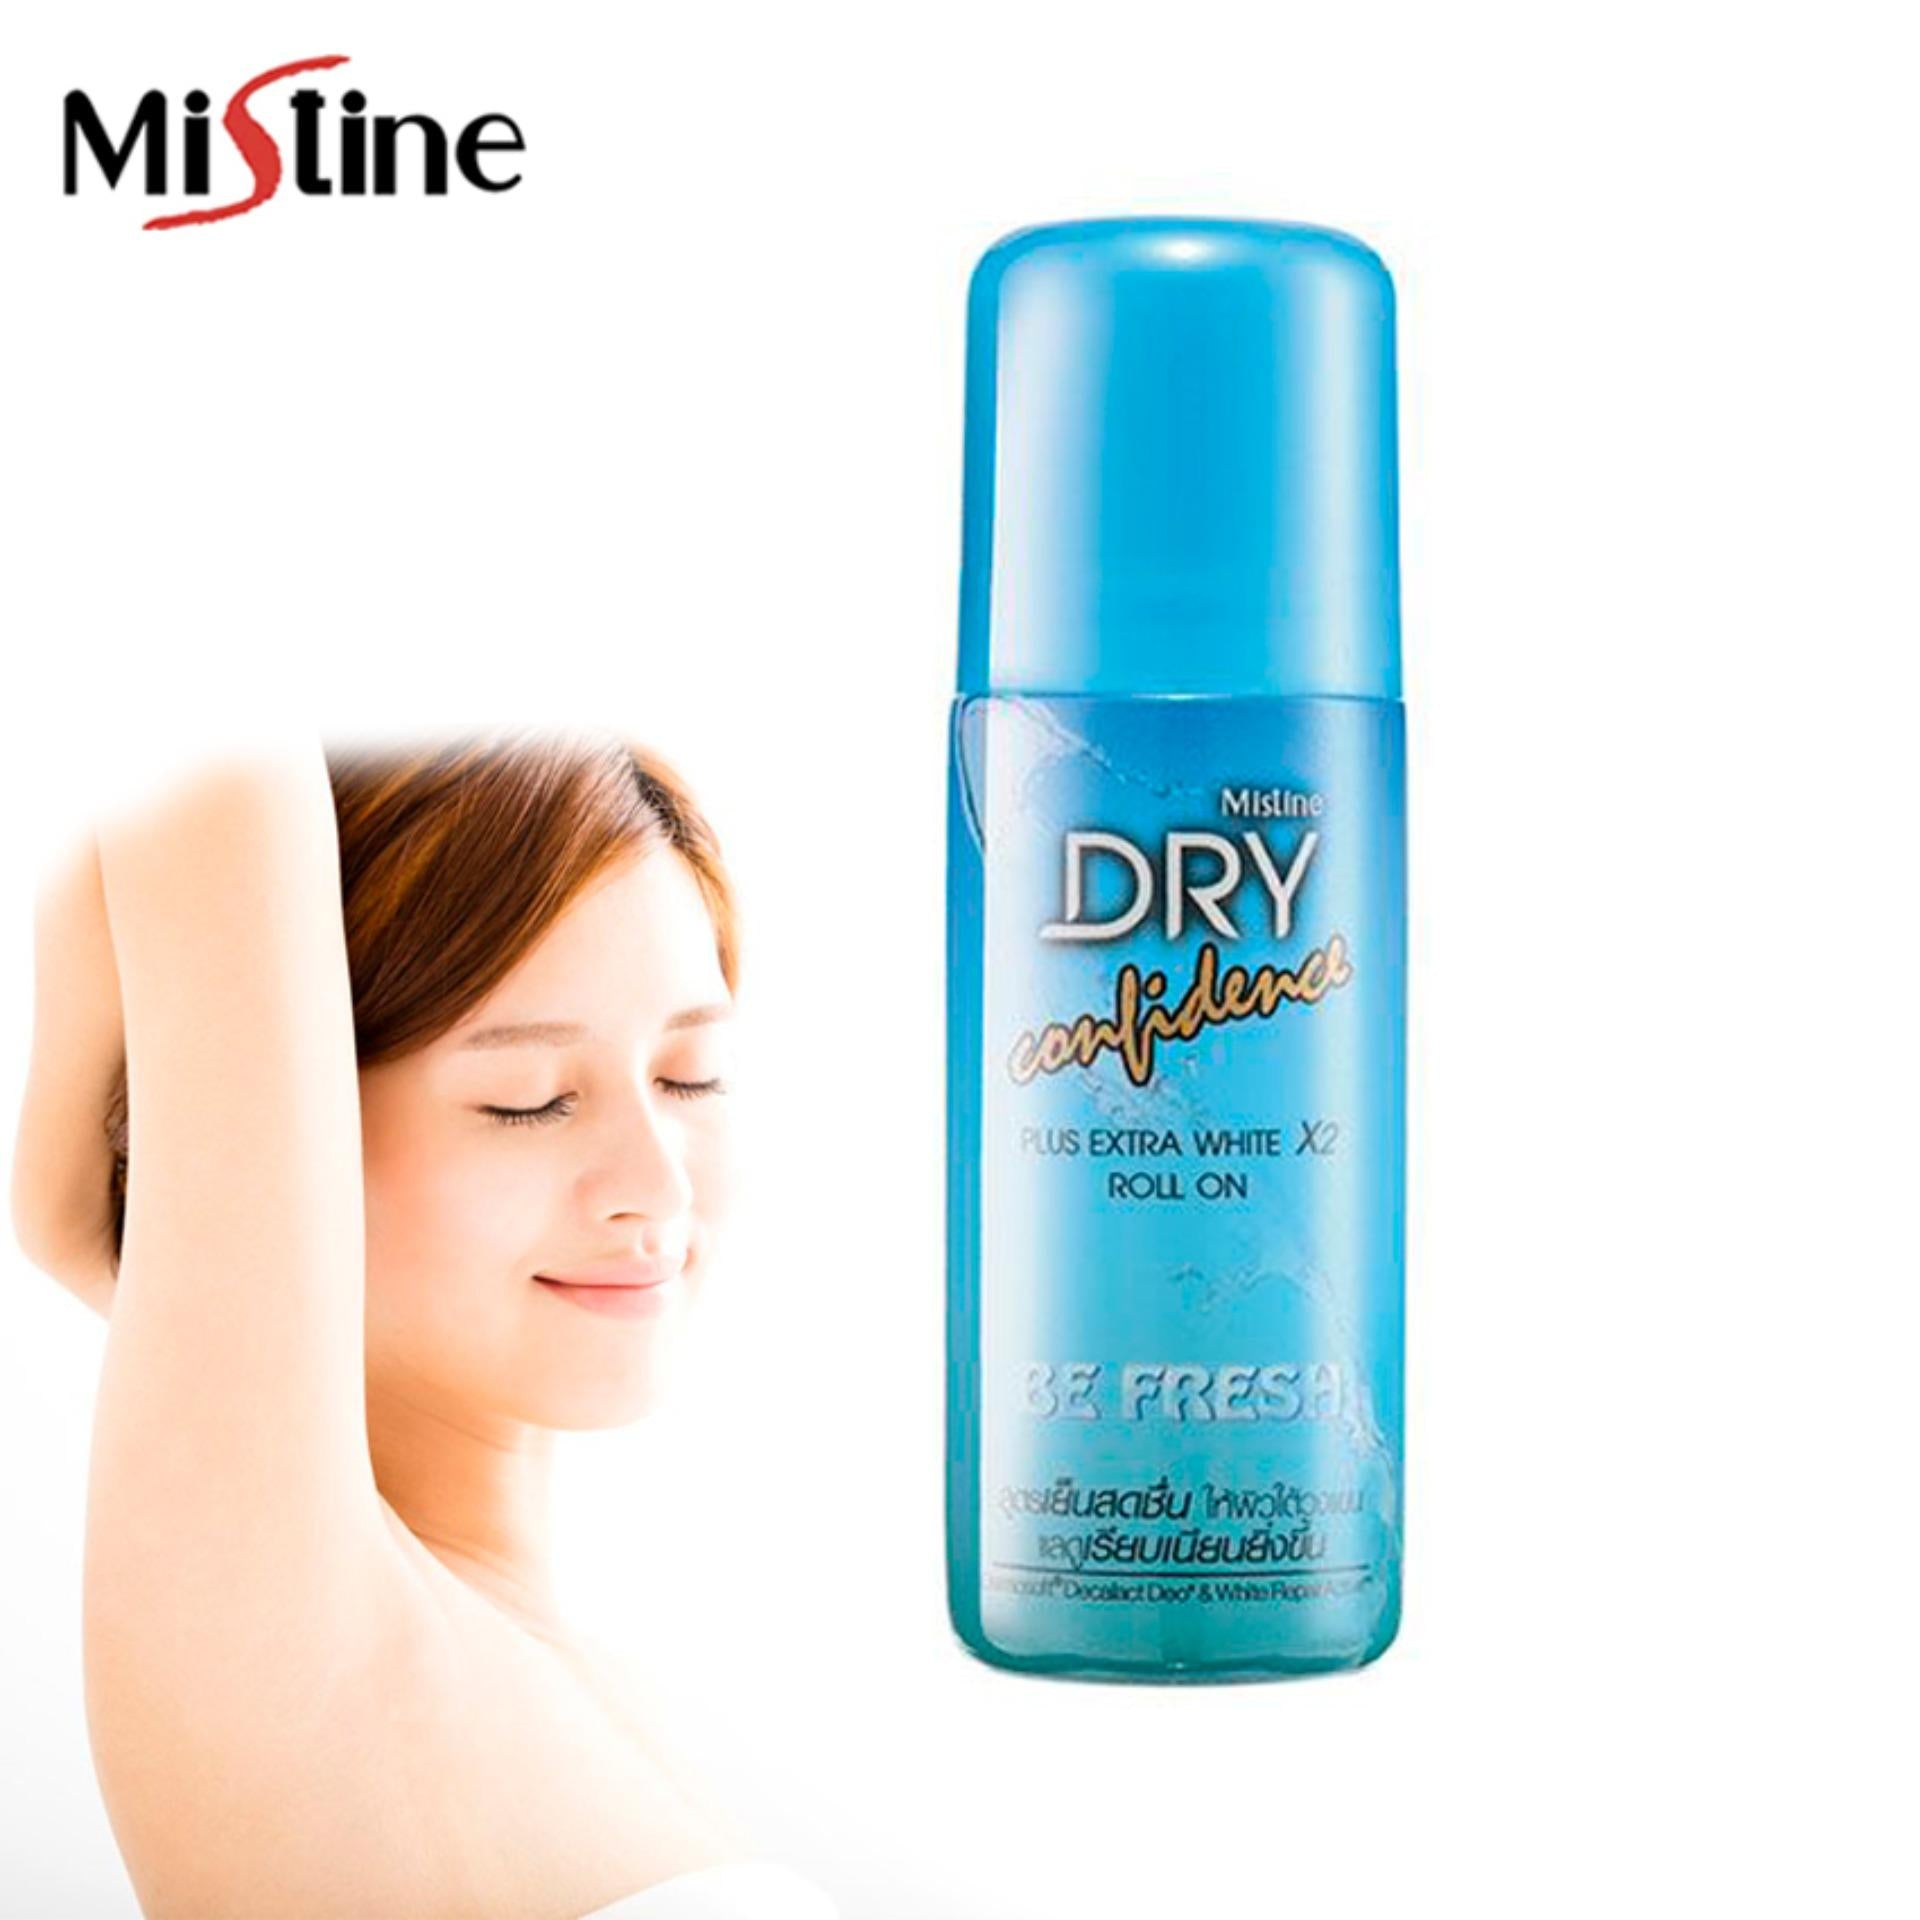 Mistine Dry Confidence Extra White Roll-on Deodorant 50 ml., Дезодорант для женщин "Конфиденциальность" отбеливающий 50 мл.